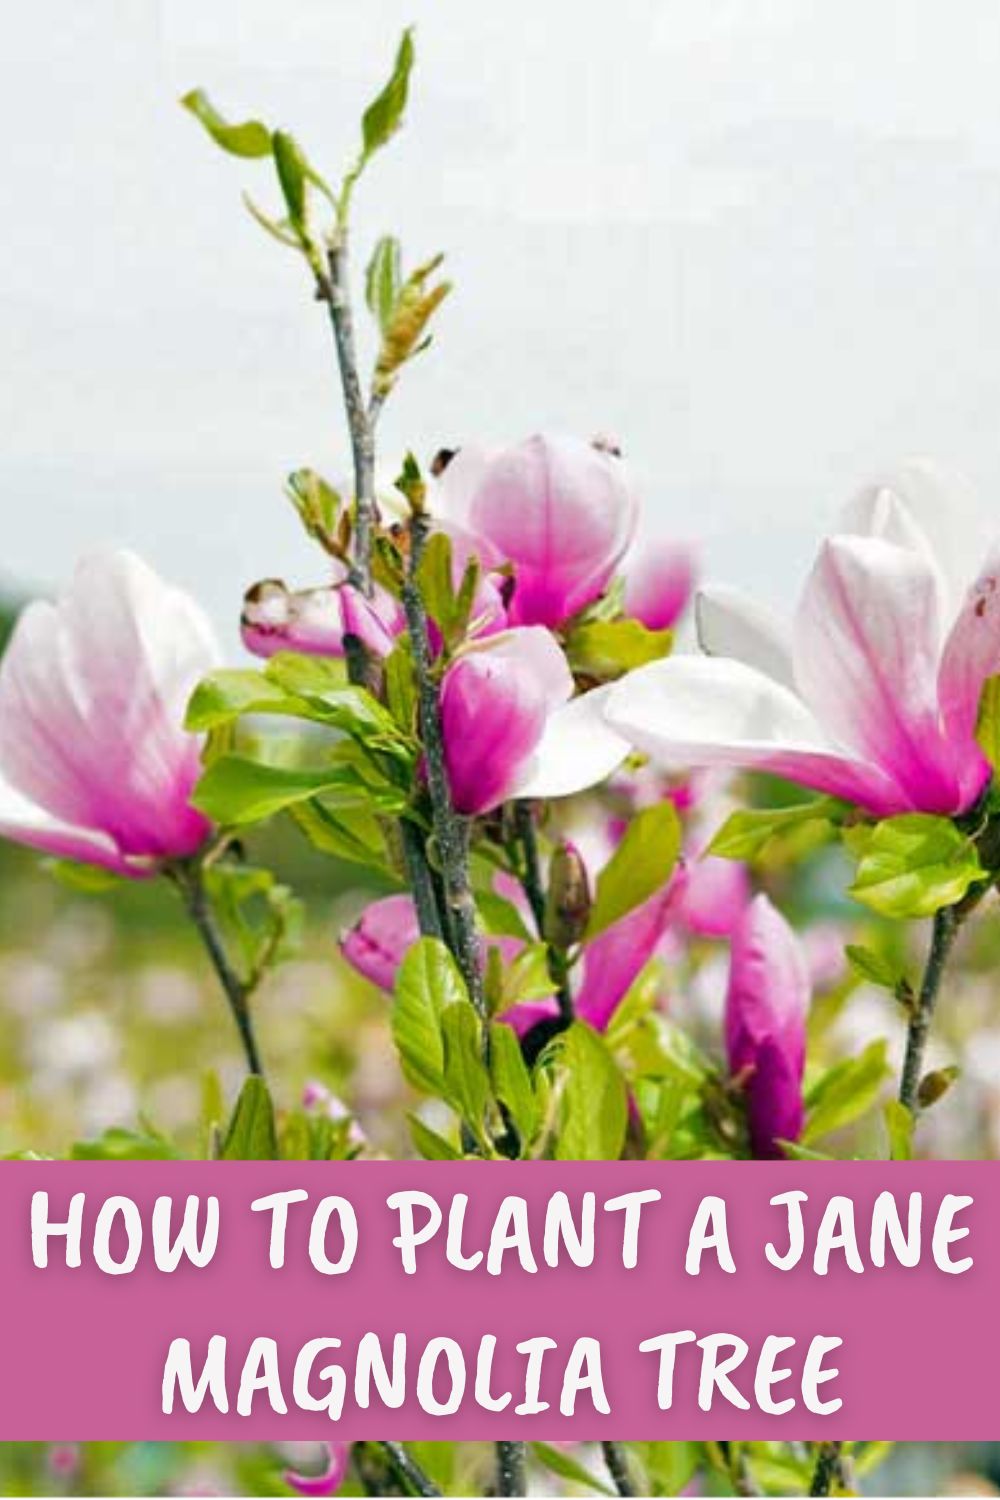  How to plant a Jane magnolia tree.